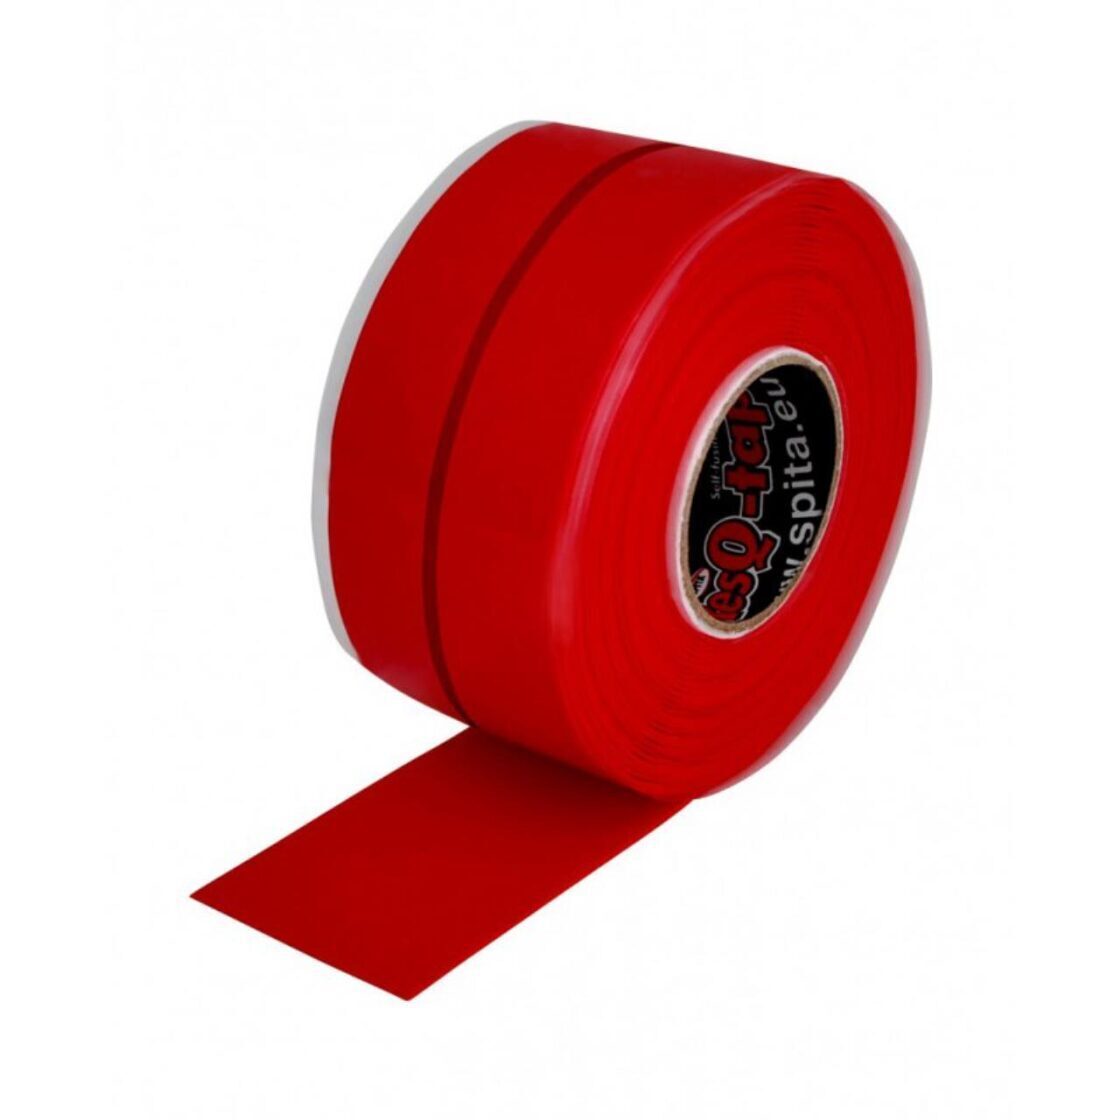 ResQ-Plast selbstklebender Verband 25mm breit rot